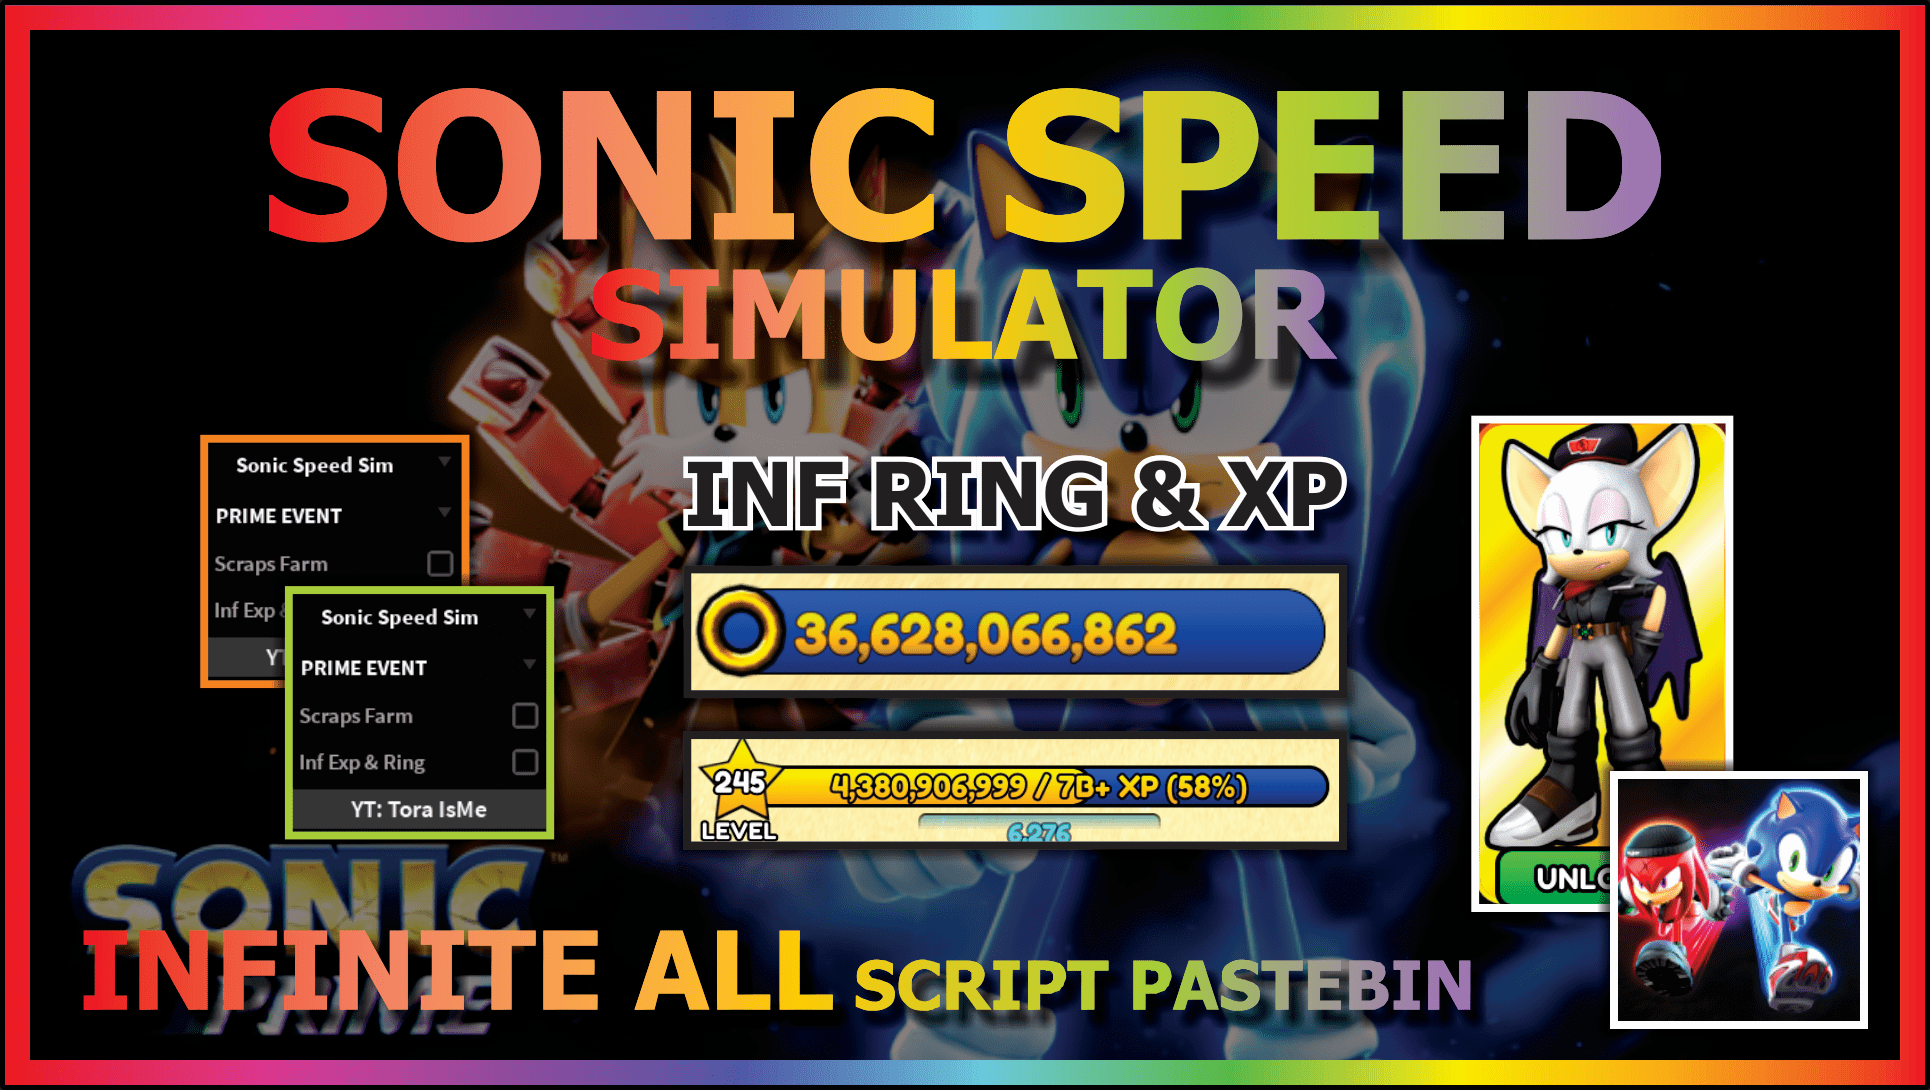 Sonic Speed Simulator Script – DailyPastebin